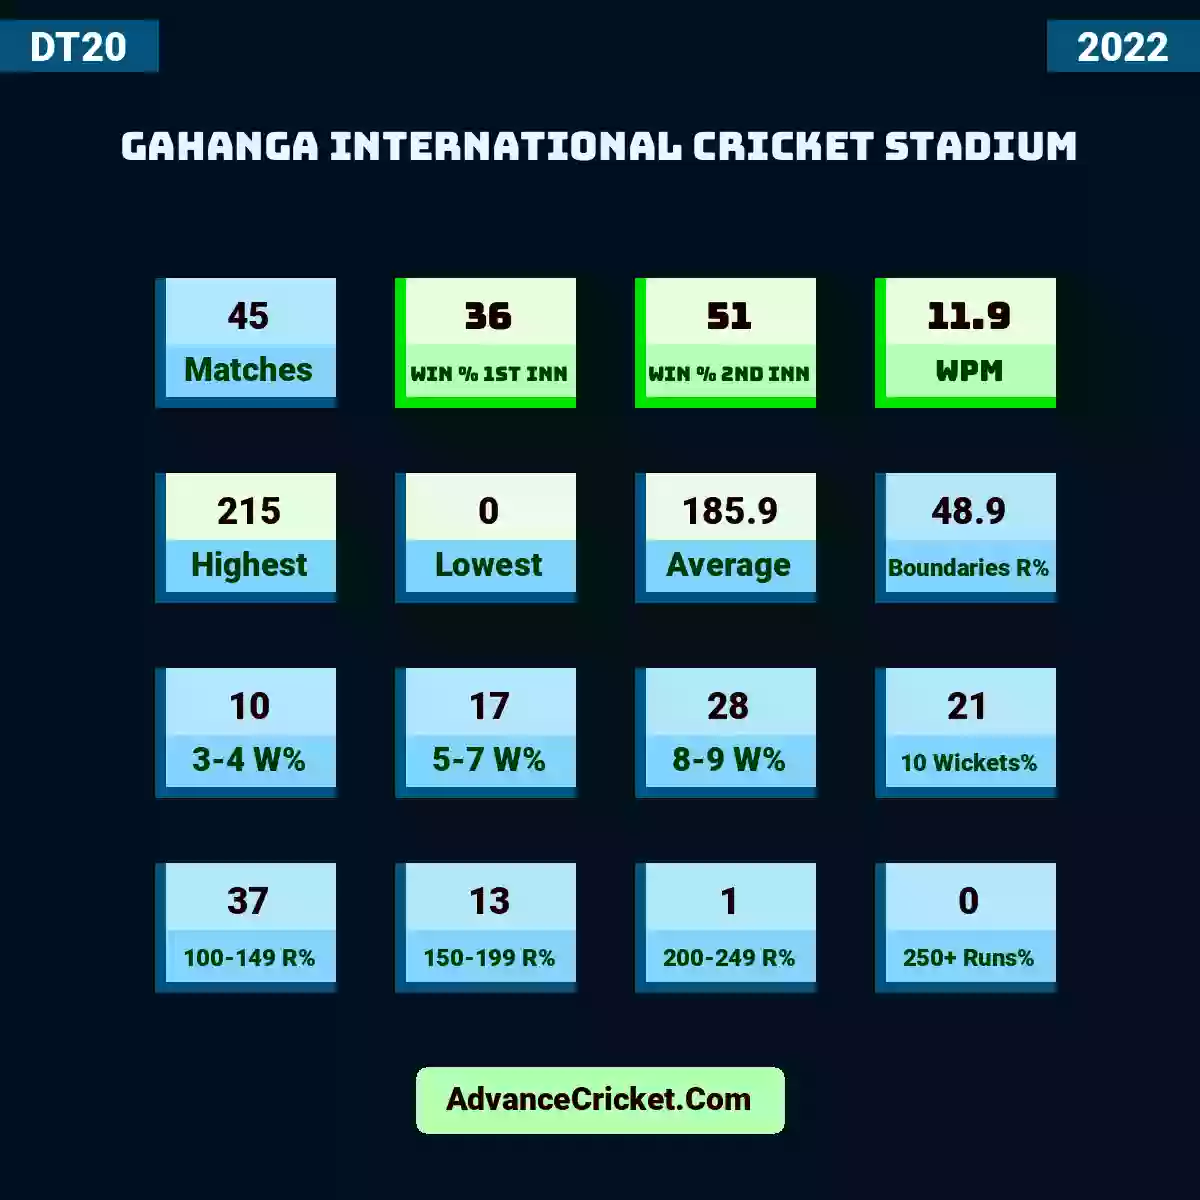 Image showing Gahanga International Cricket Stadium with Matches: 45, Win % 1st Inn: 36, Win % 2nd Inn: 51, WPM: 11.9, Highest: 215, Lowest: 0, Average: 185.9, Boundaries R%: 48.9, 3-4 W%: 10, 5-7 W%: 17, 8-9 W%: 28, 10 Wickets%: 21, 100-149 R%: 37, 150-199 R%: 13, 200-249 R%: 1, 250+ Runs%: 0.